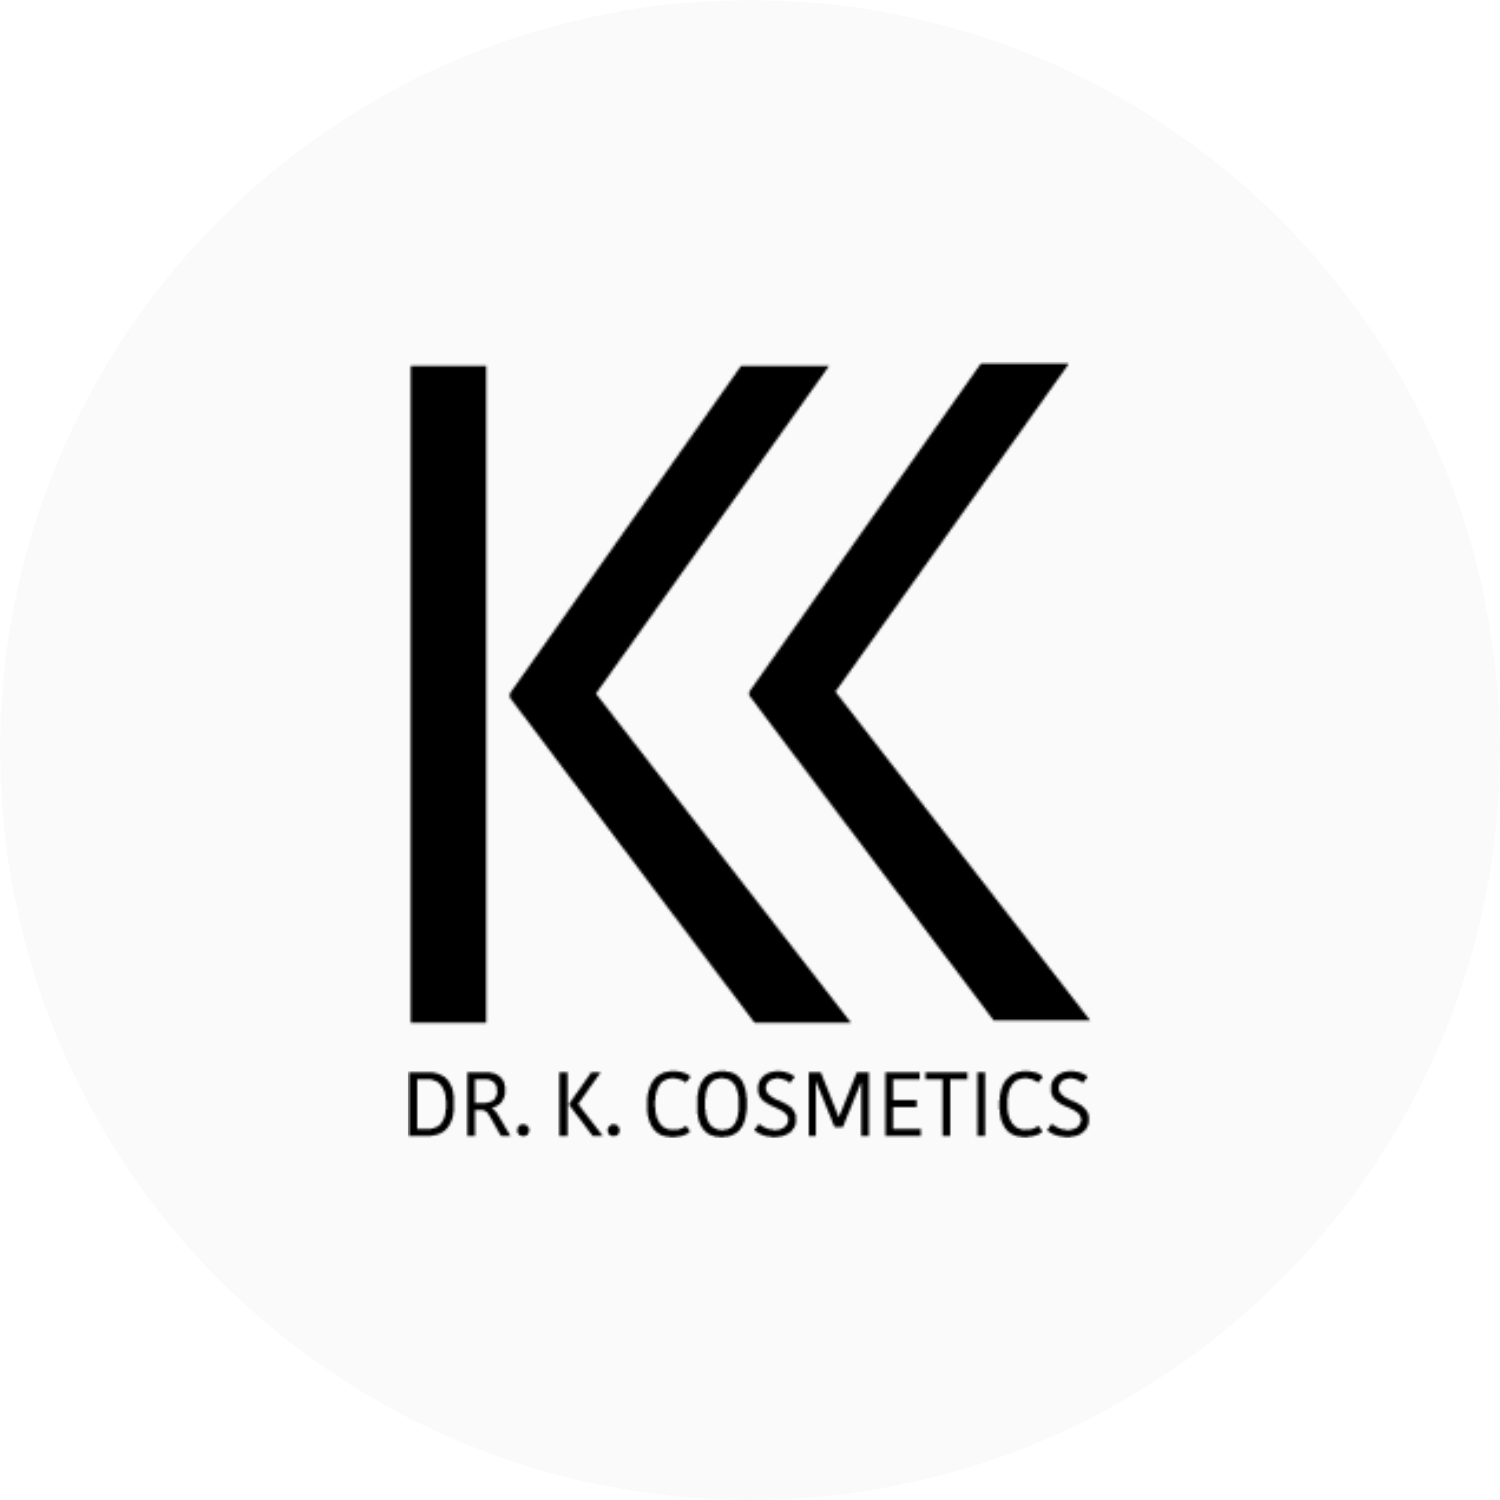 DR. K. COSMETICS